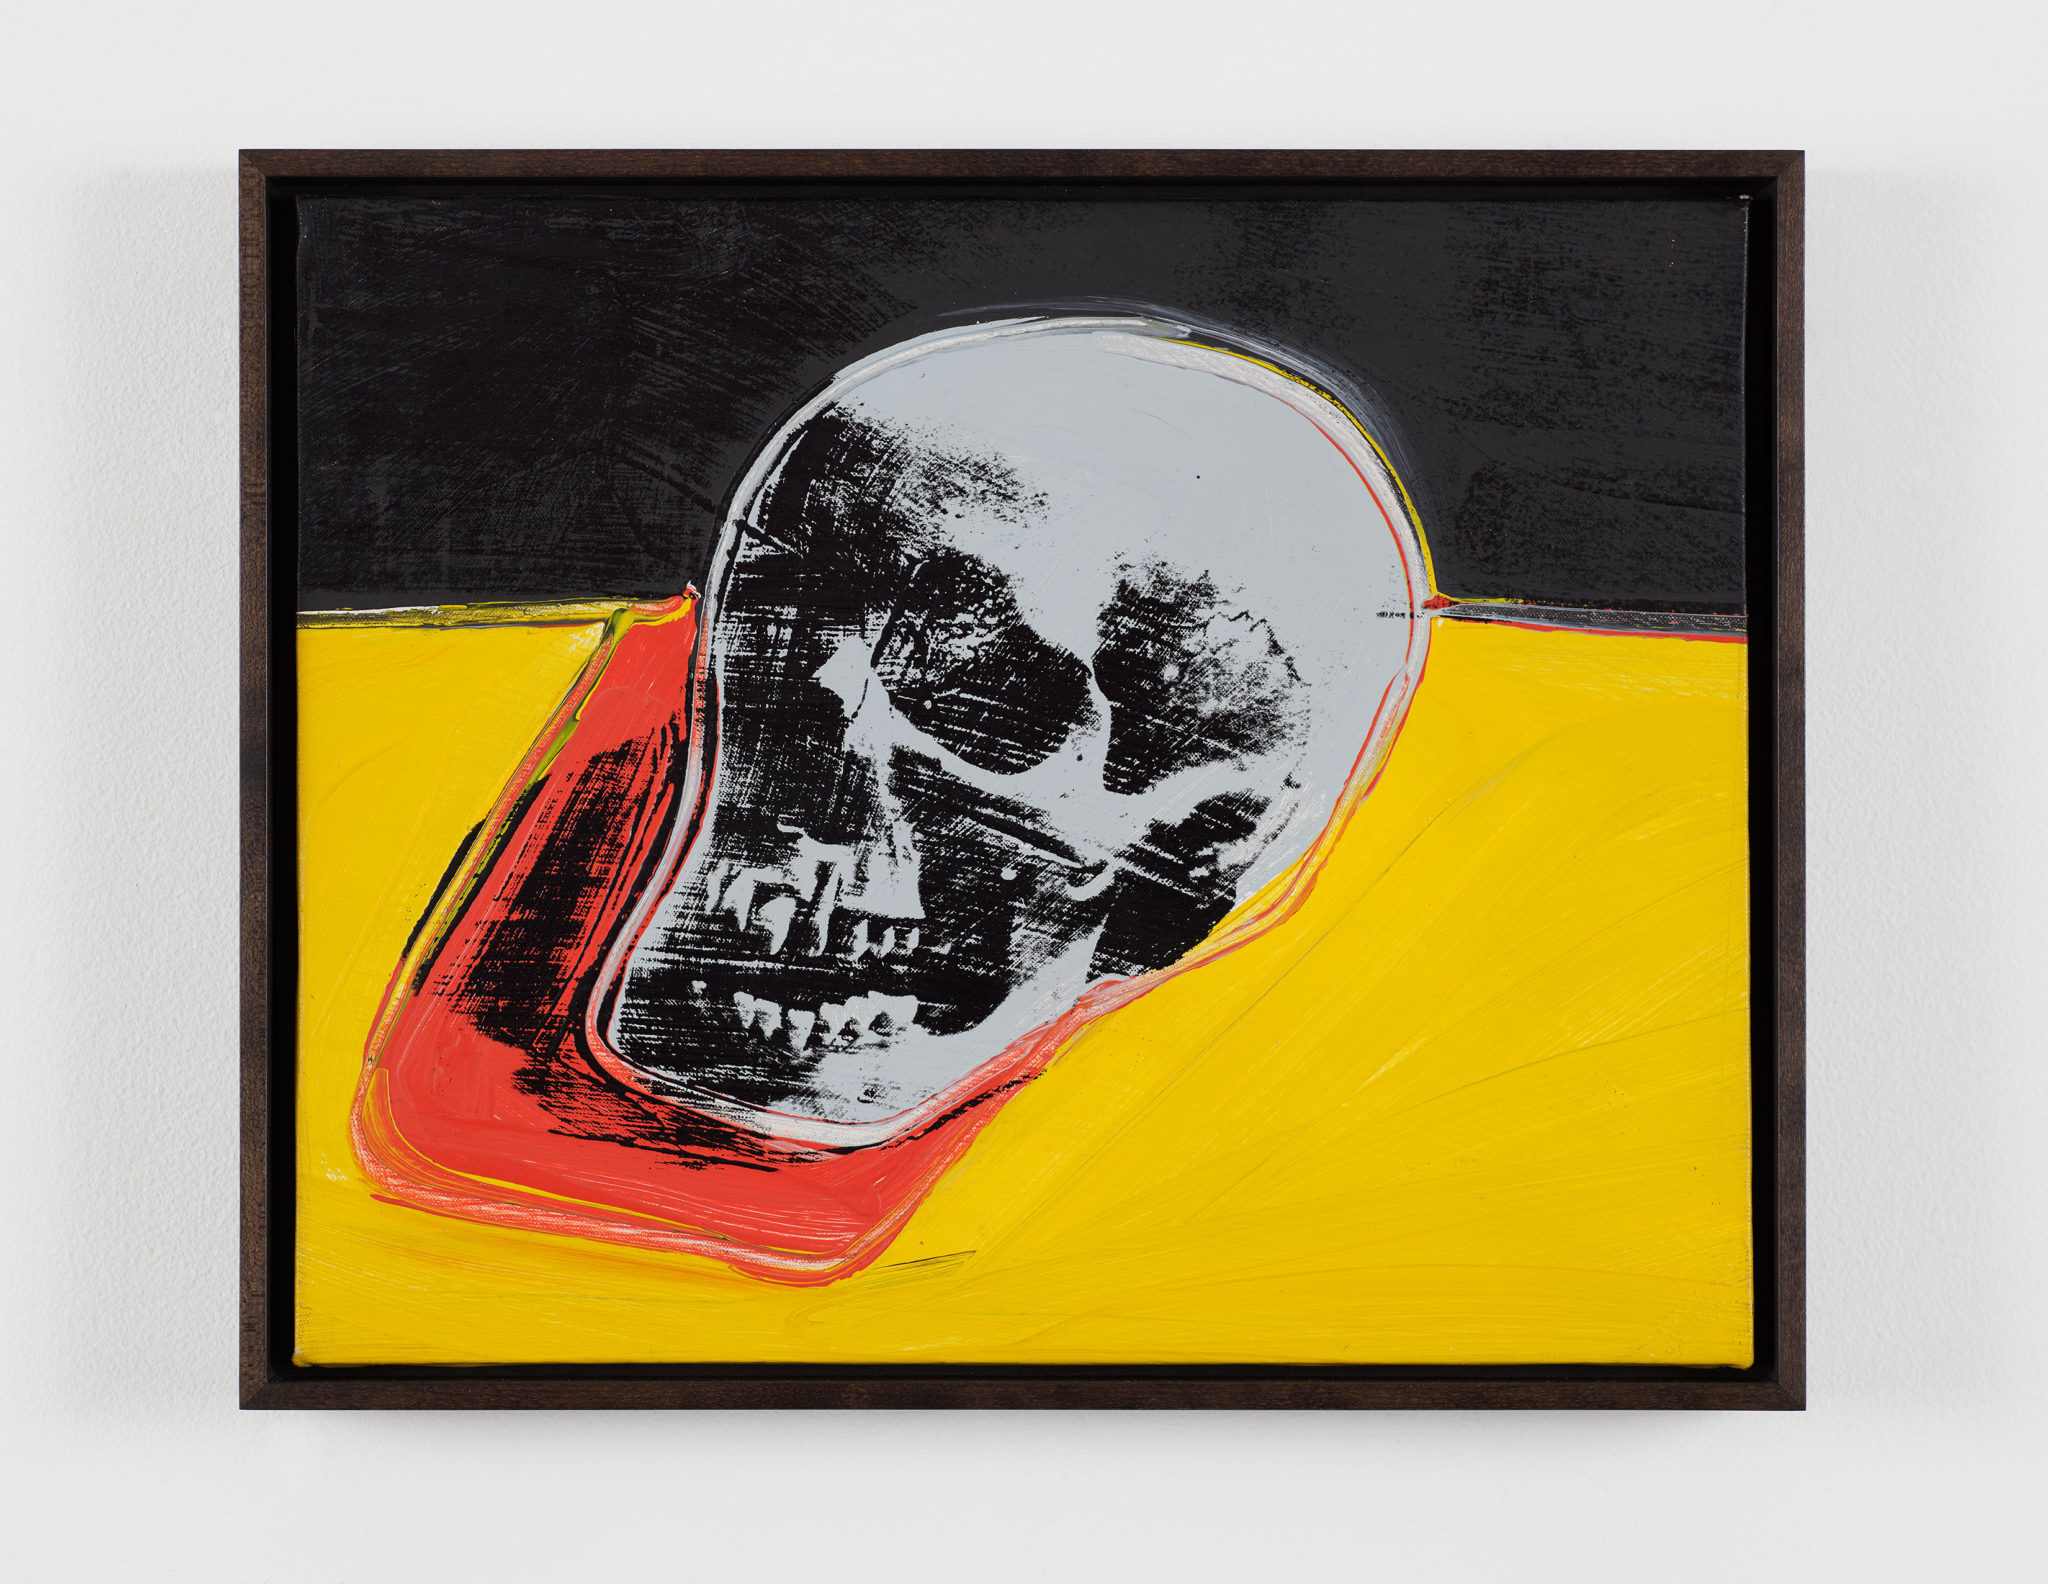 Detail view of Andy Warhol's print Skulls, 1976